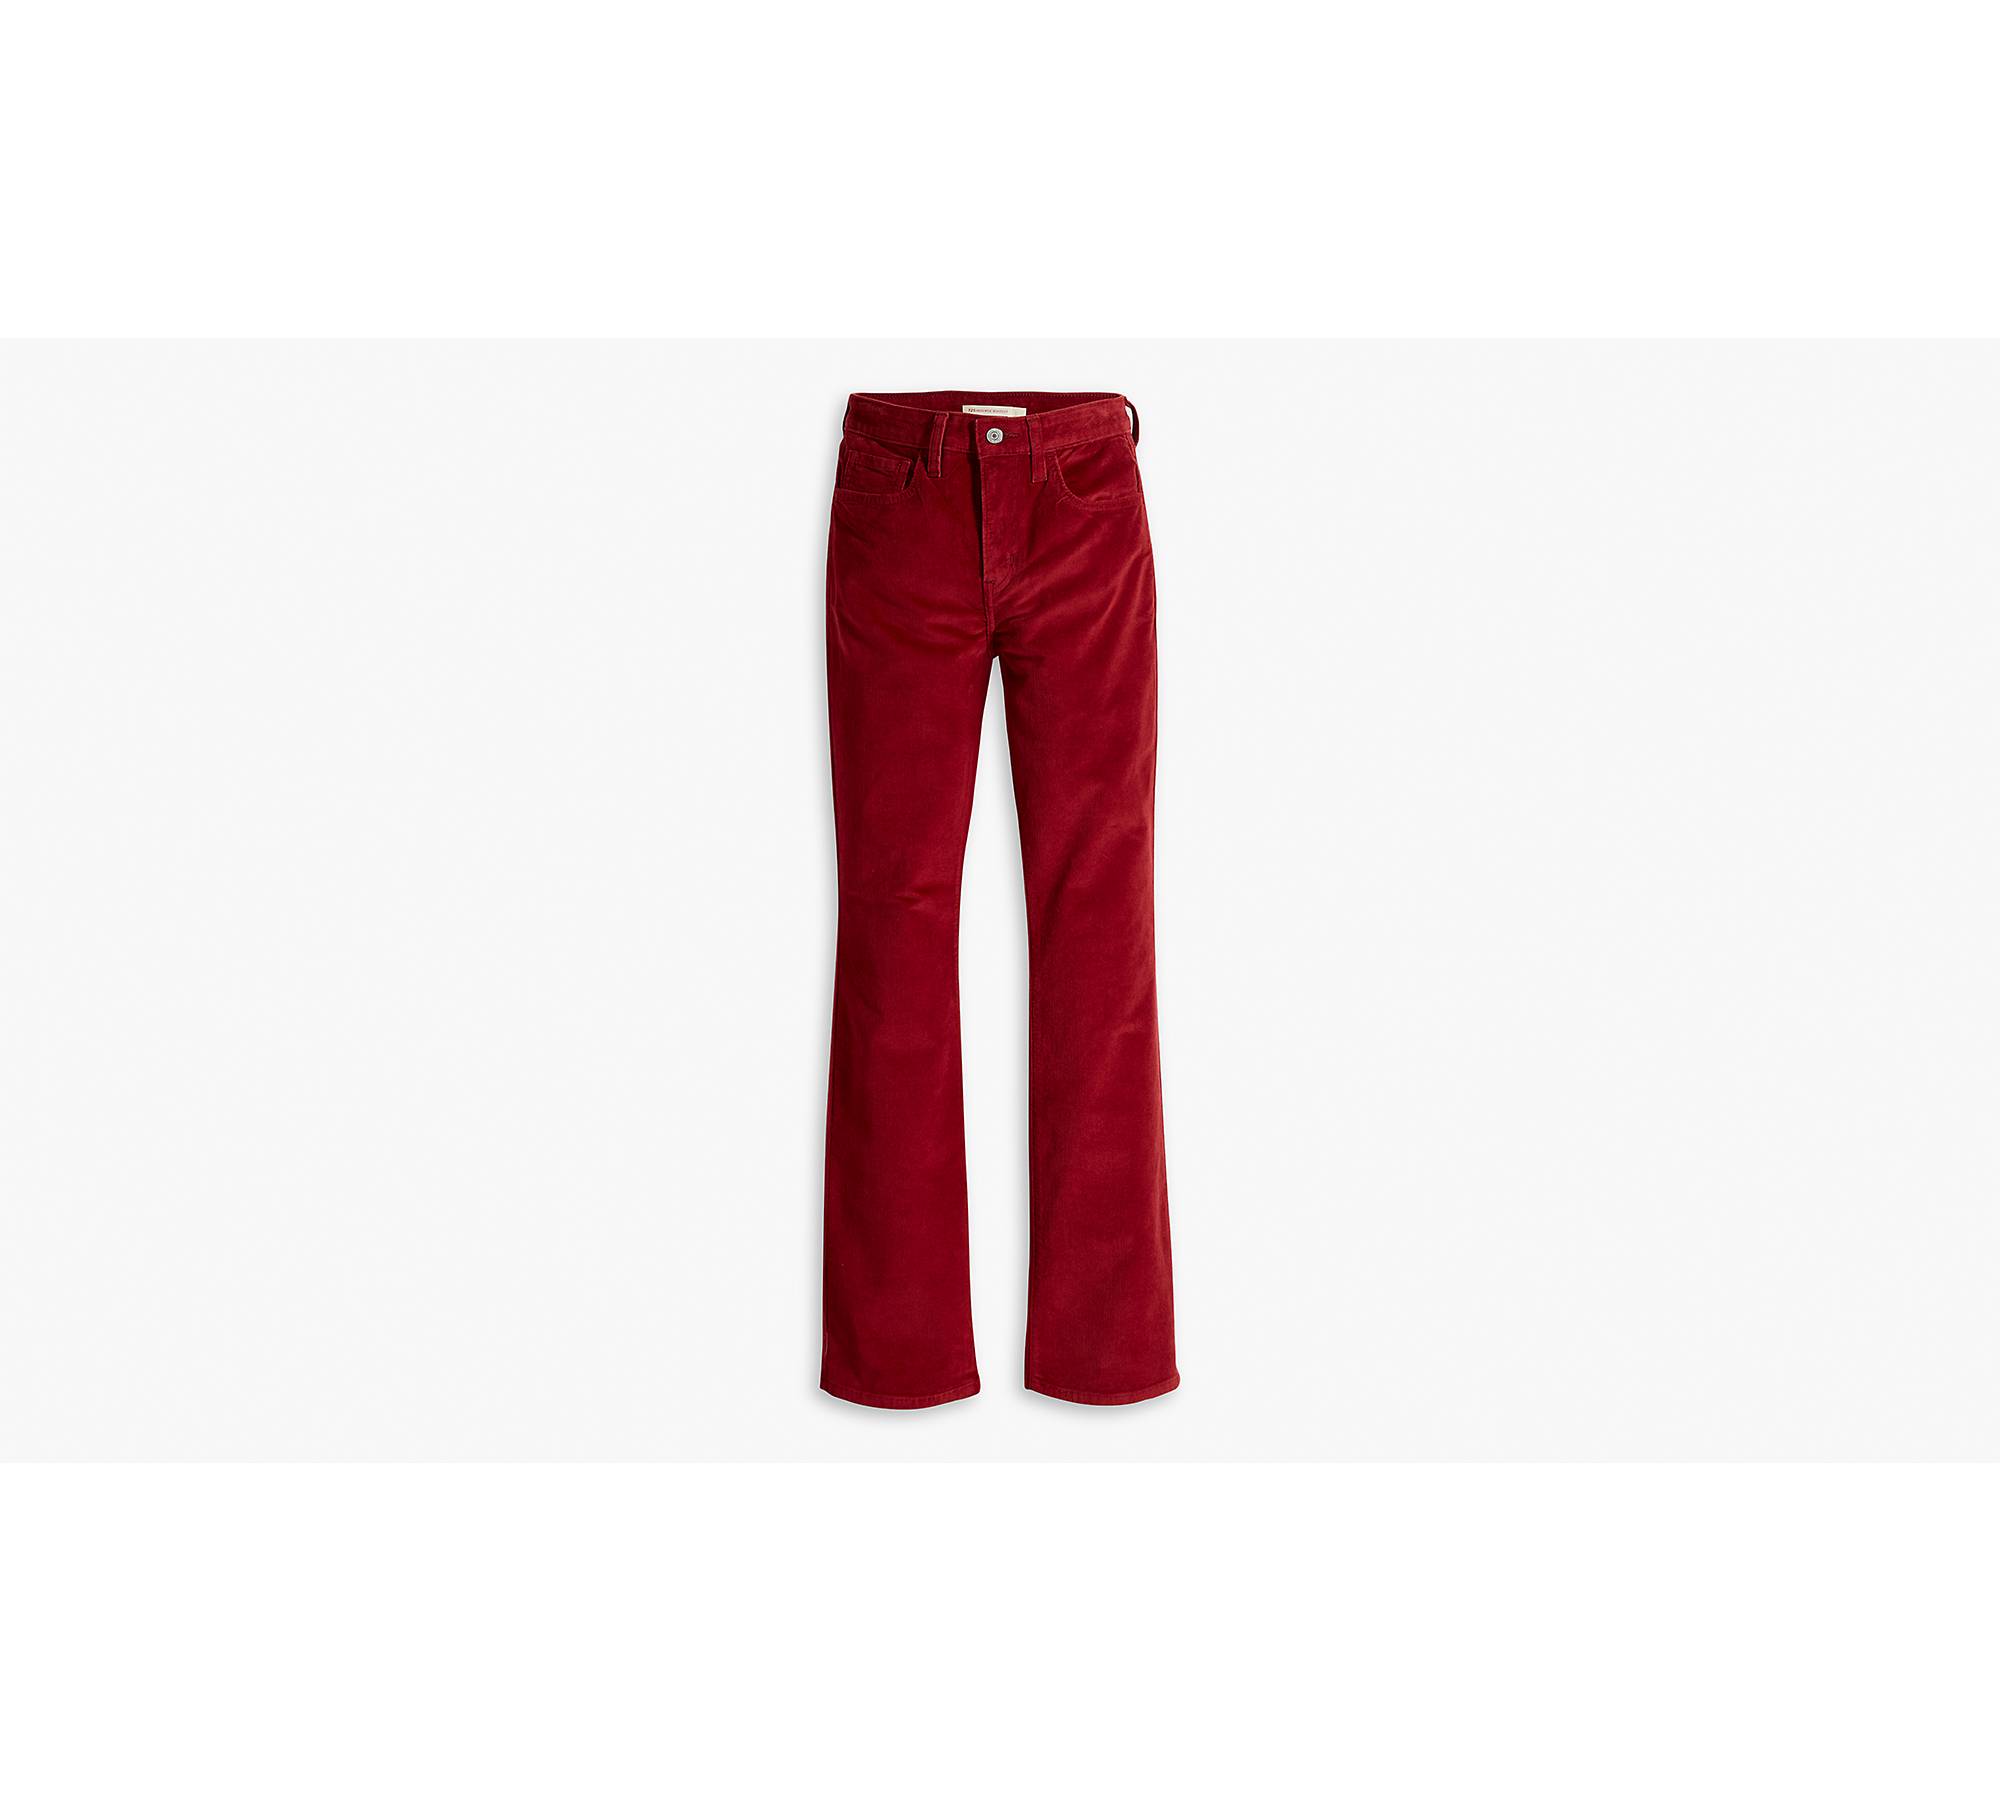 Women's High-Rise Corduroy Skinny Jeans - Universal Thread Burgundy 0 25R  Red 